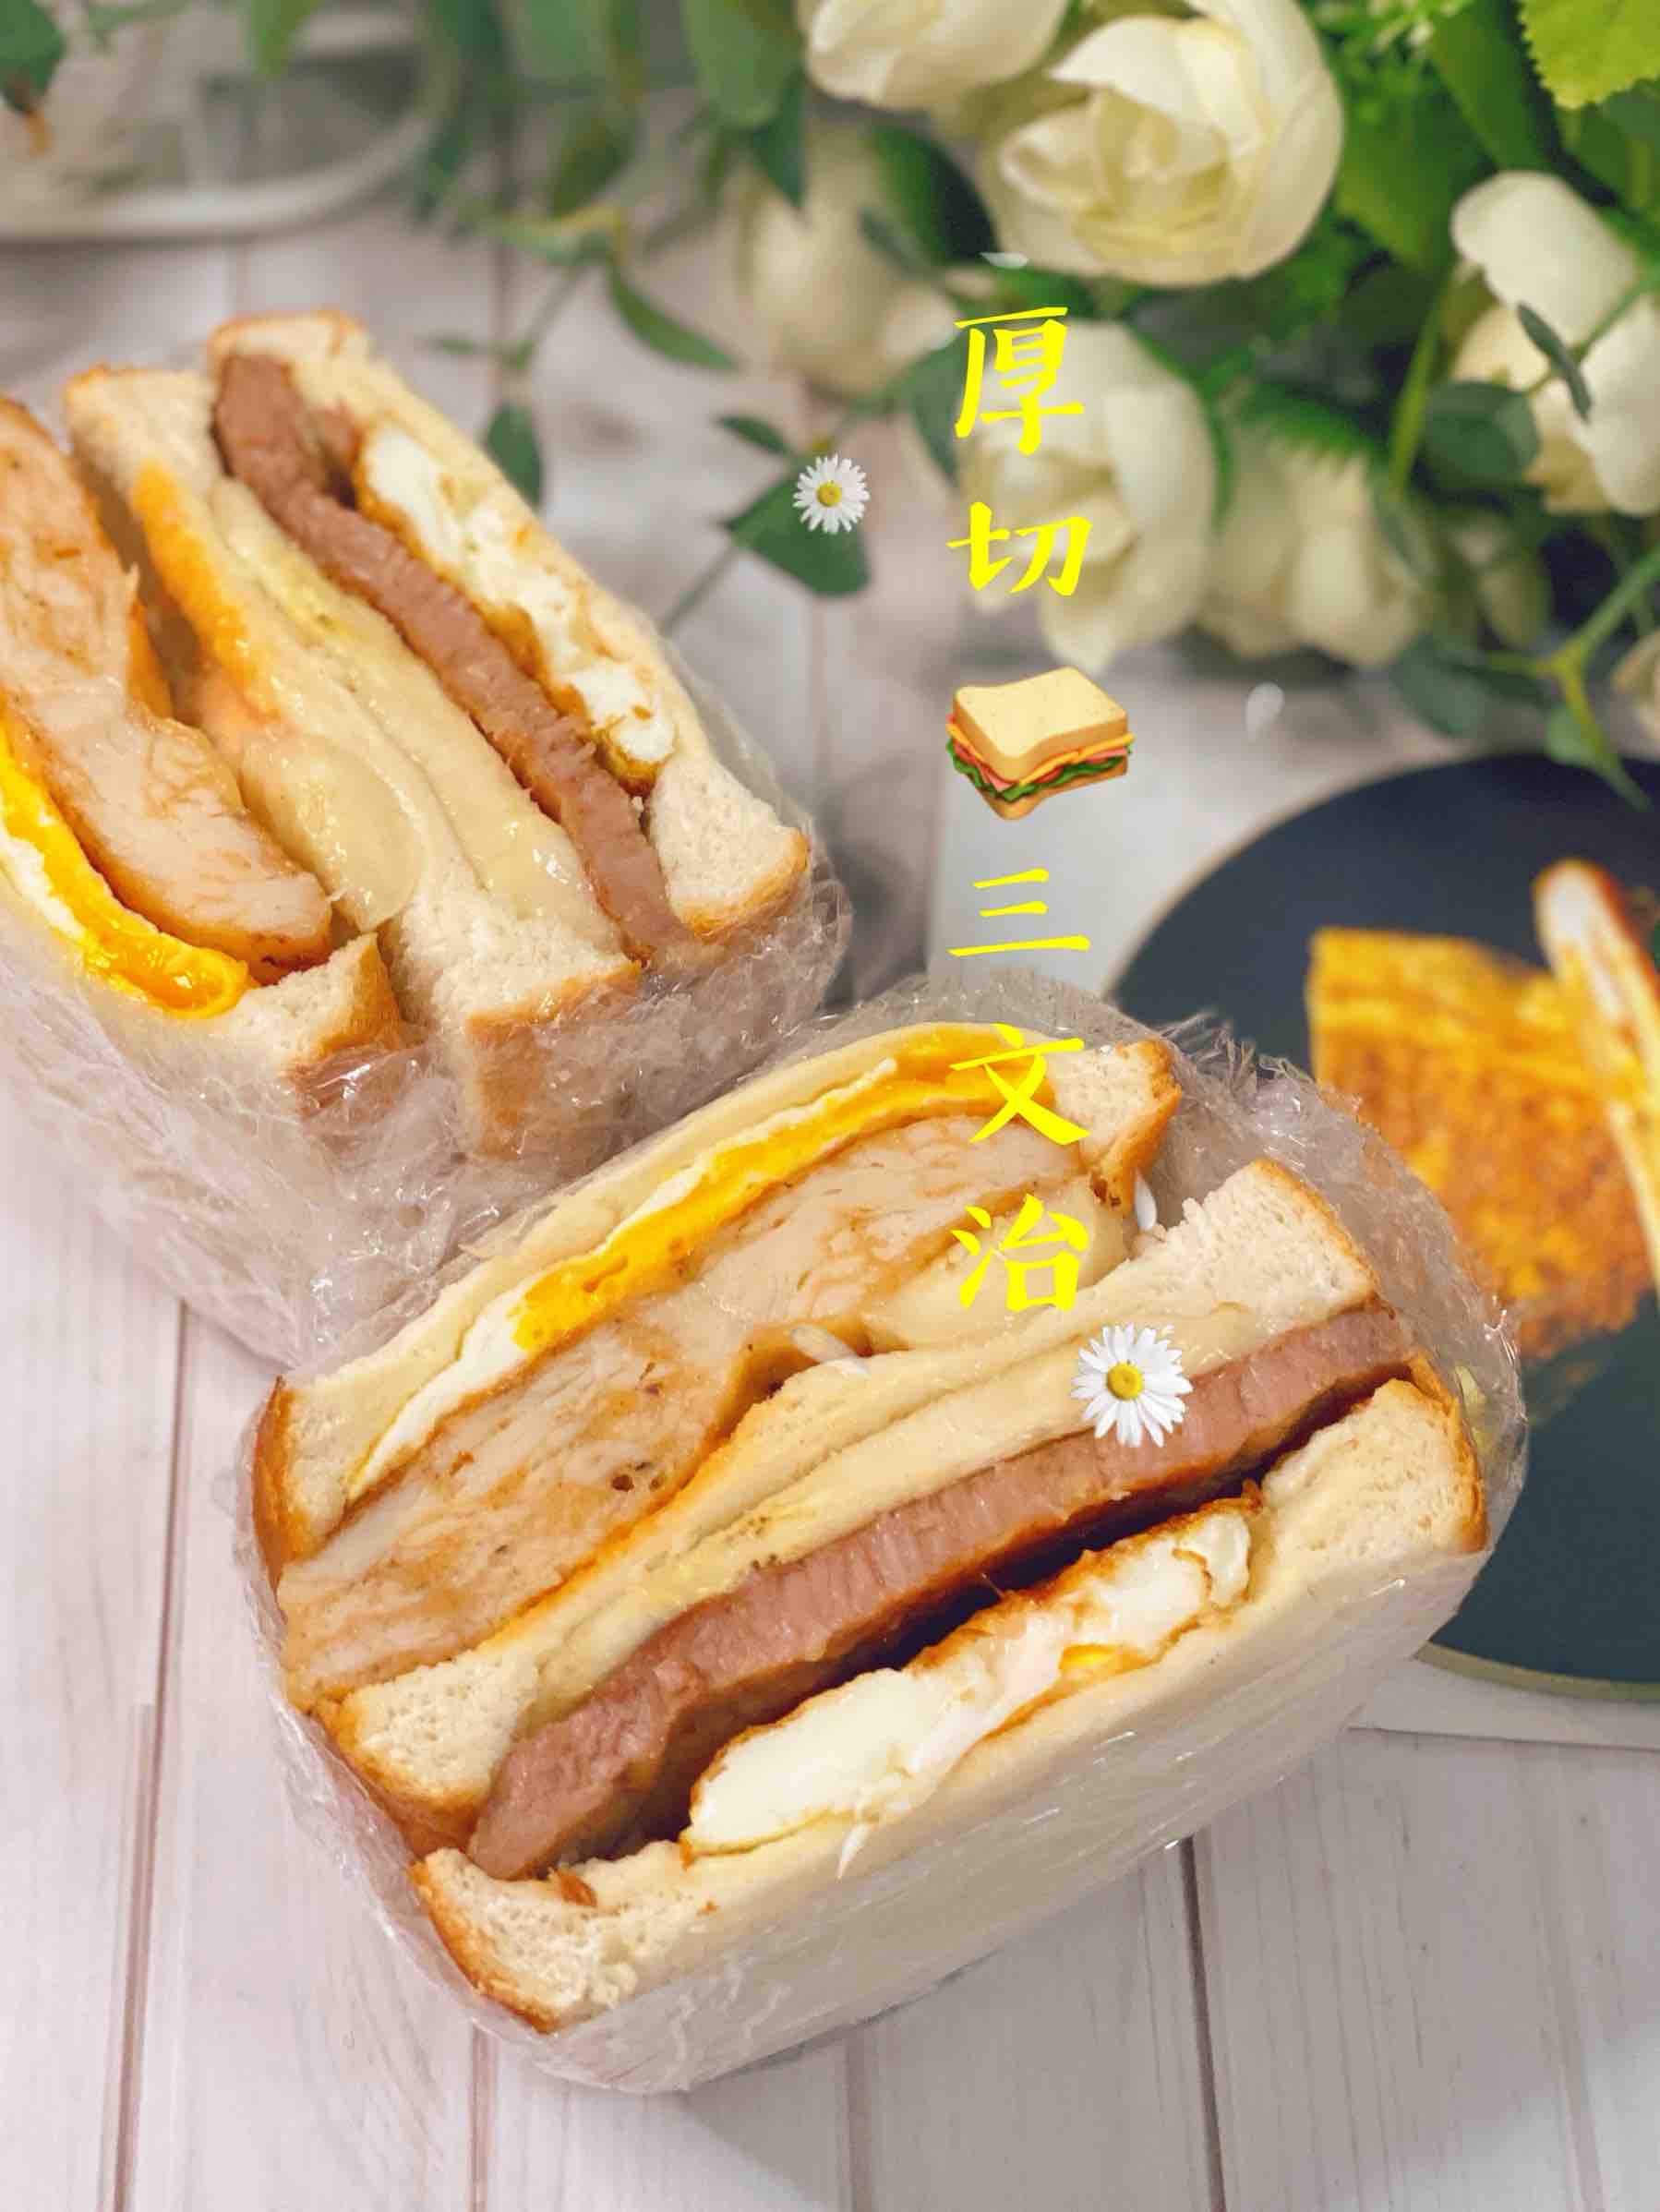 Thick-cut Sandwiches that are Bigger Than A Big Mac